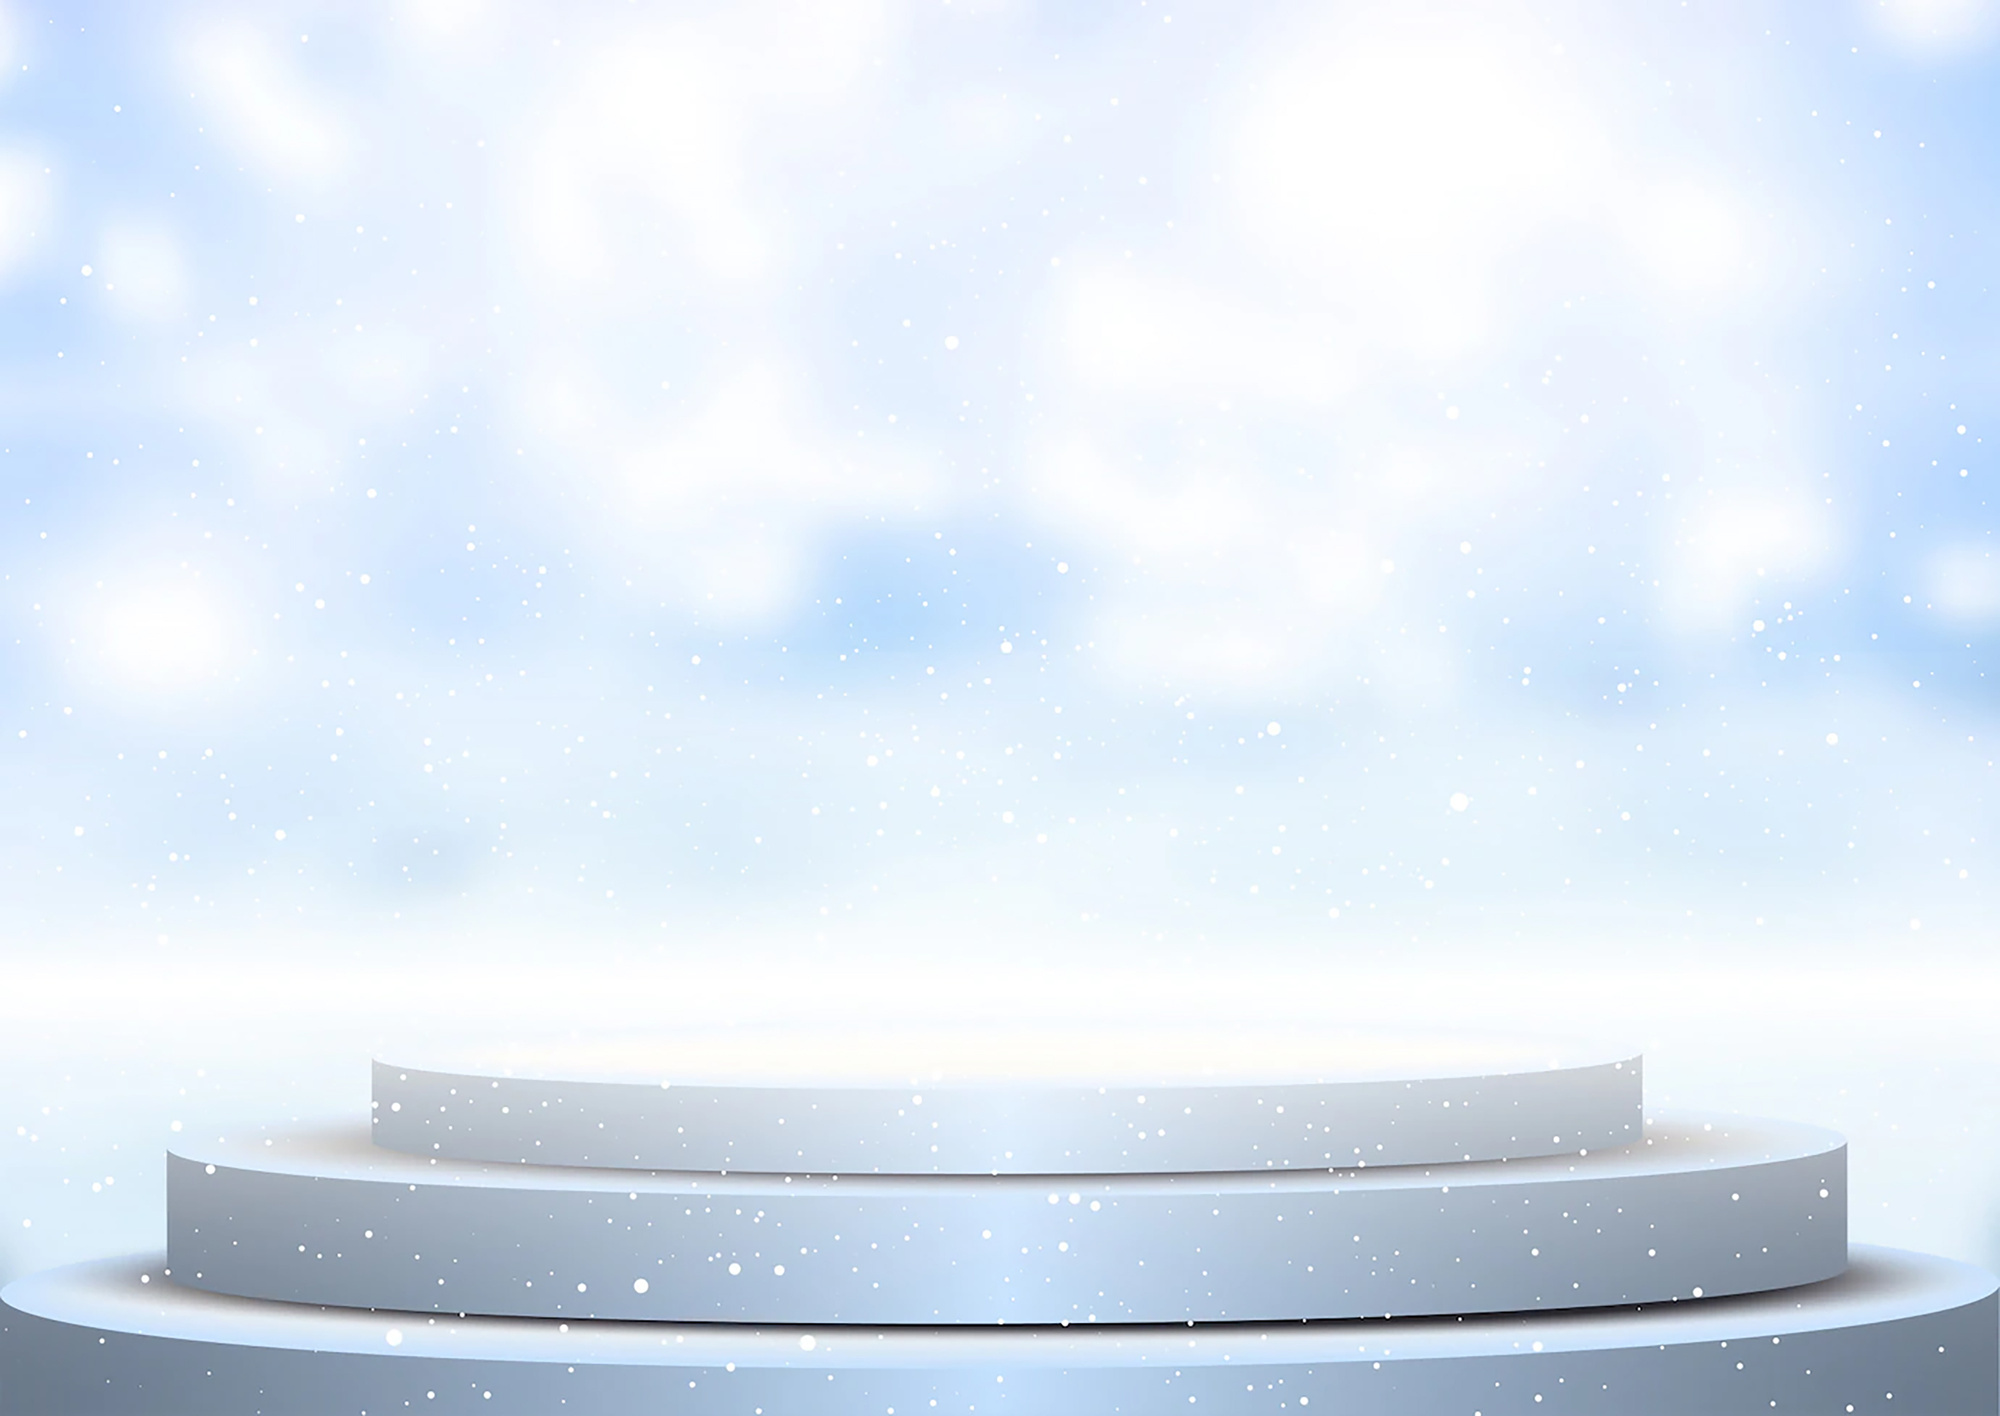 display podium against blurred winter background